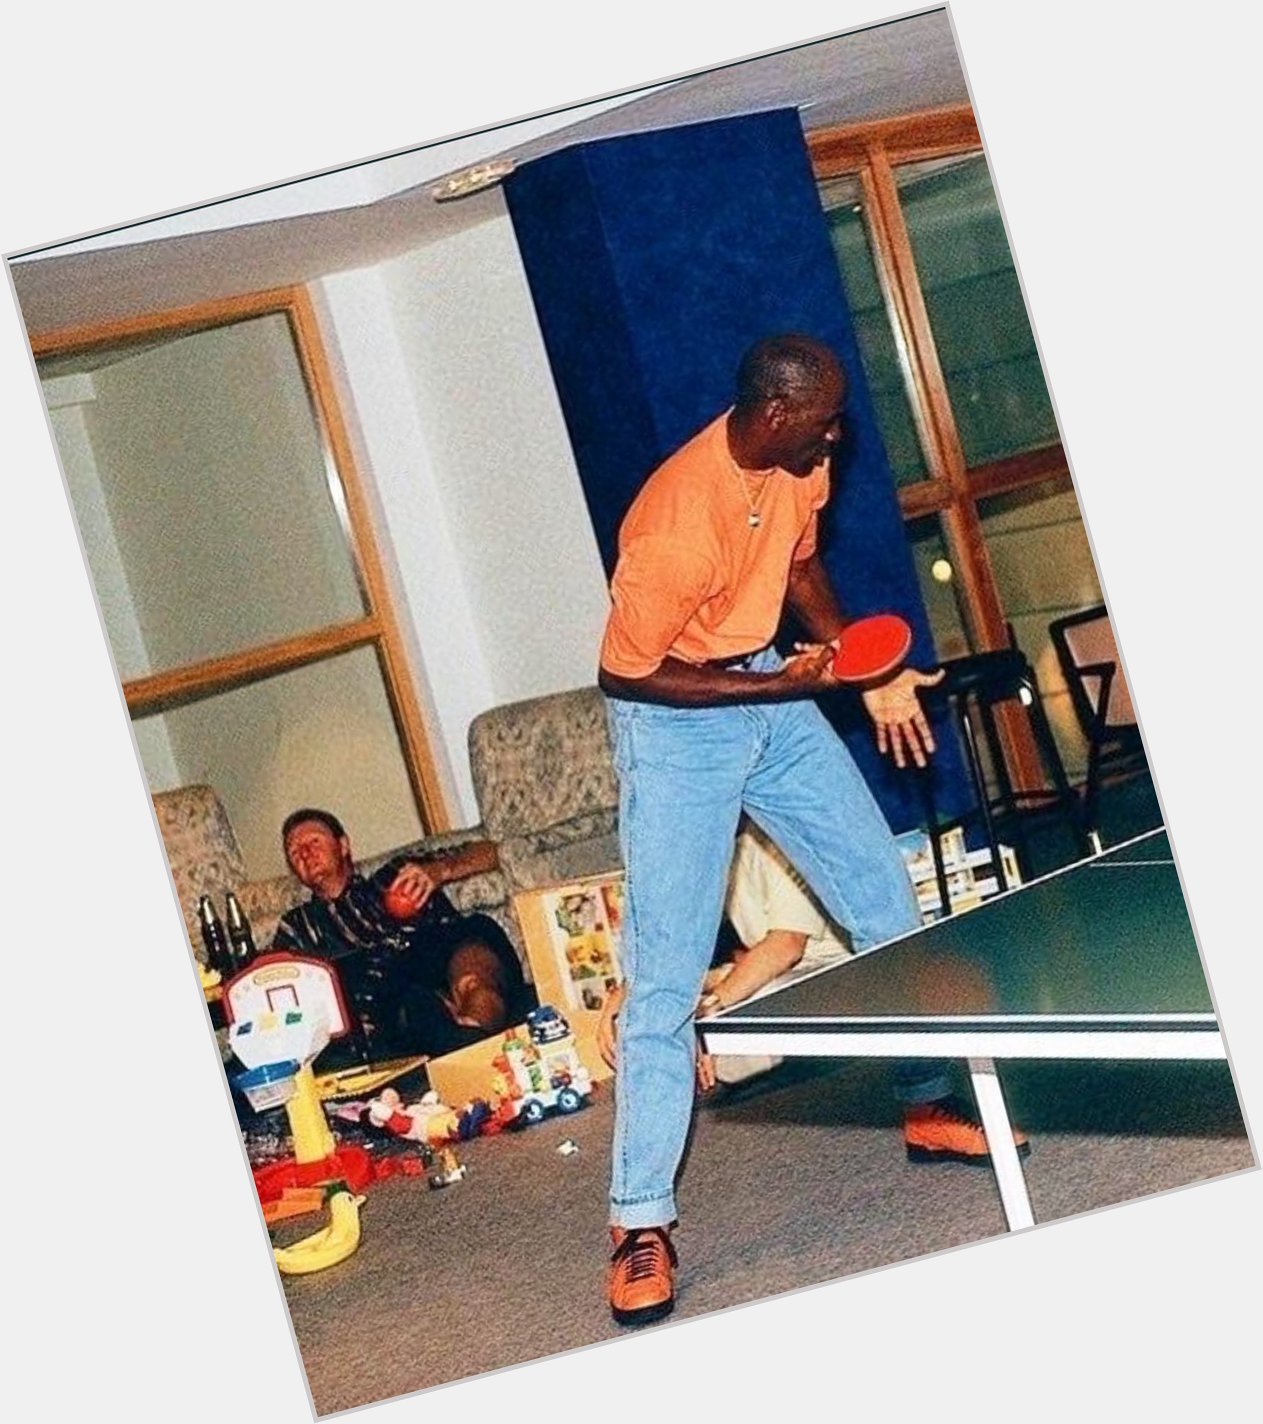 Larry Bird enjoying some beers while Michael Jordan plays table tennis. (1992)

Happy Birthday Larry Legend! 